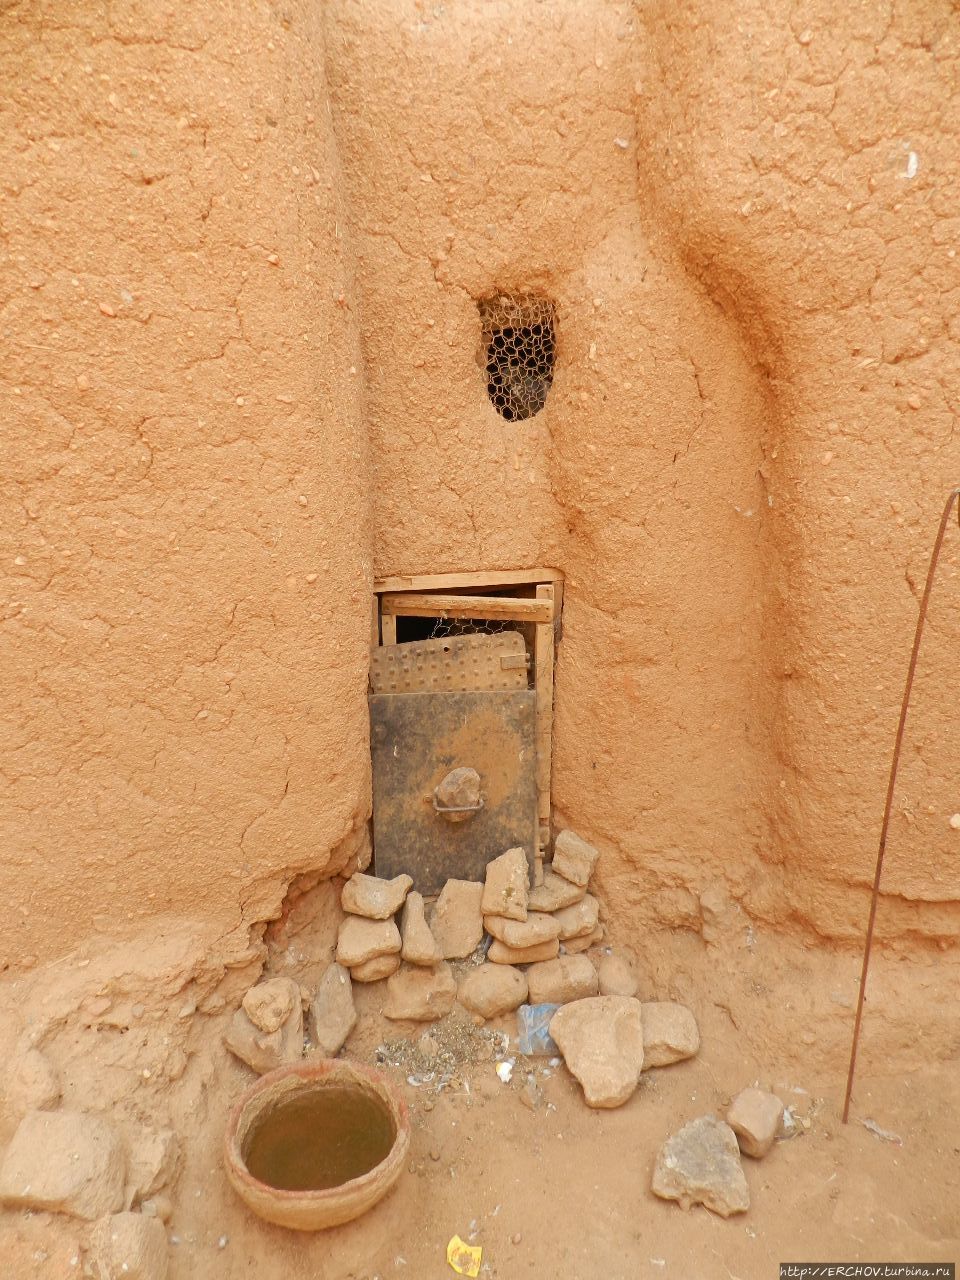 Дом пекаря Агадес, Нигер